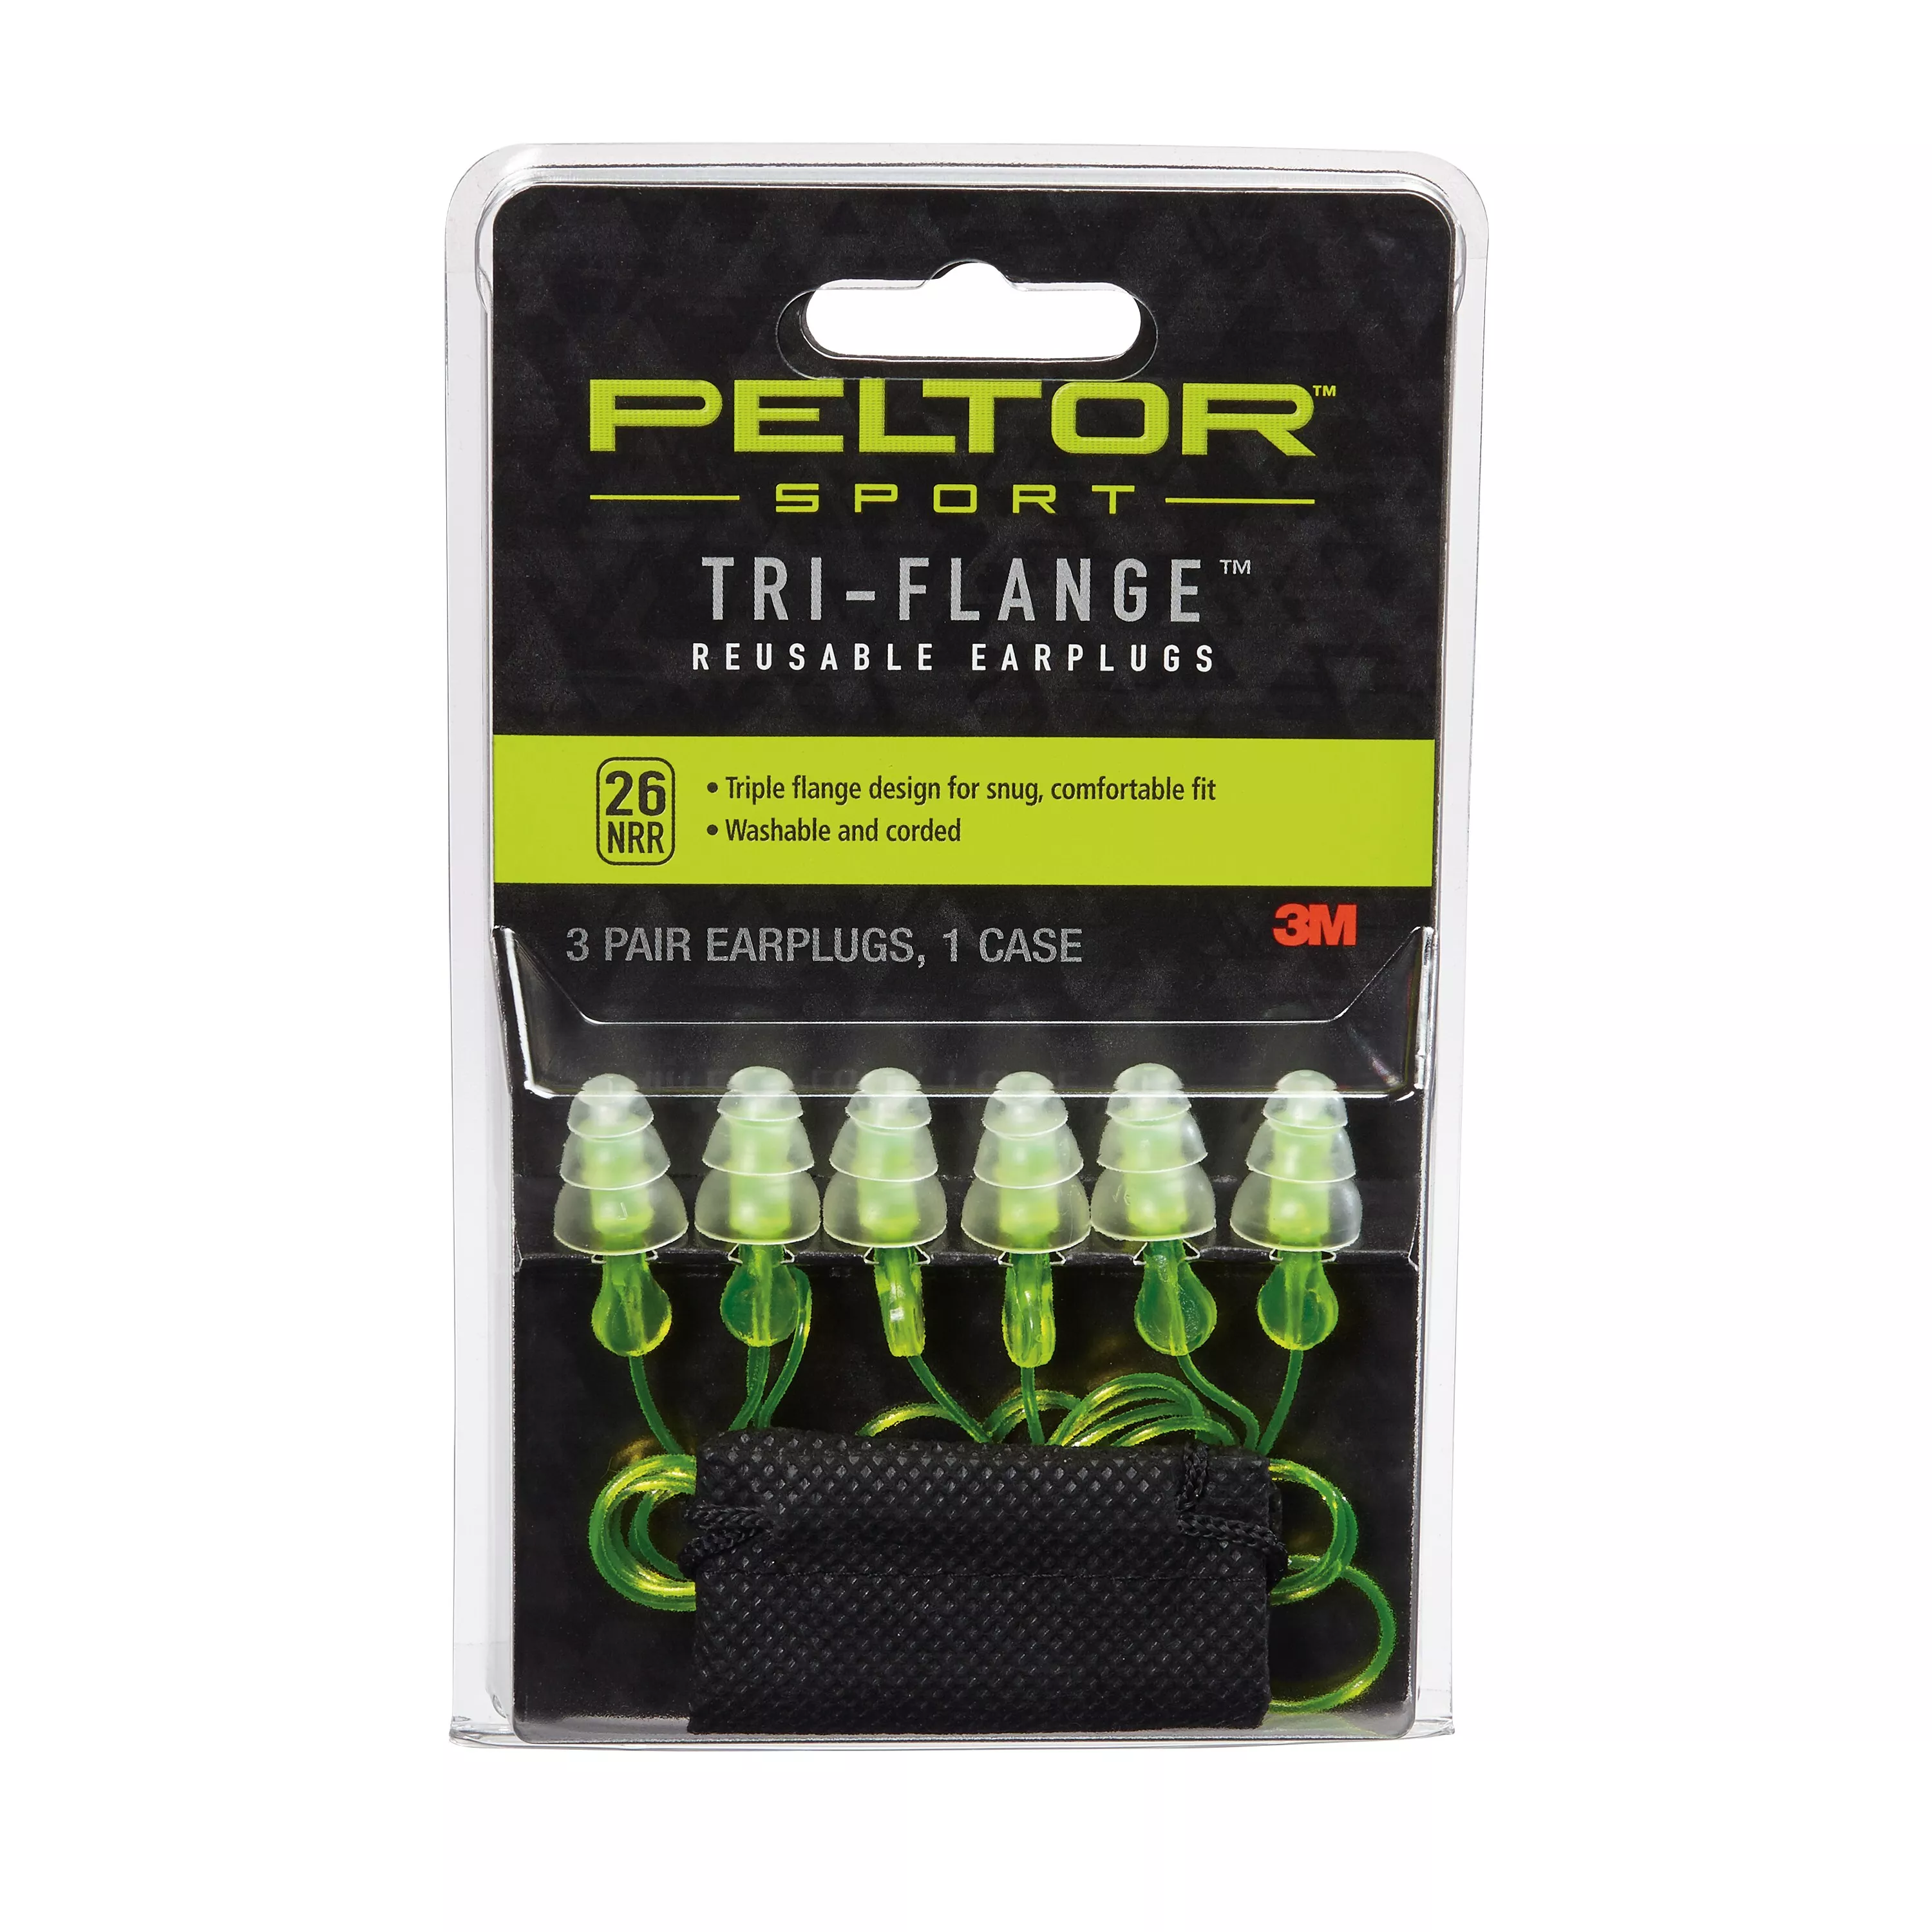 Peltor™ Sport Tri-Flange™ Corded Reusable Earplugs 97317-10DC, 3 Pair
Pack Neon Yellow